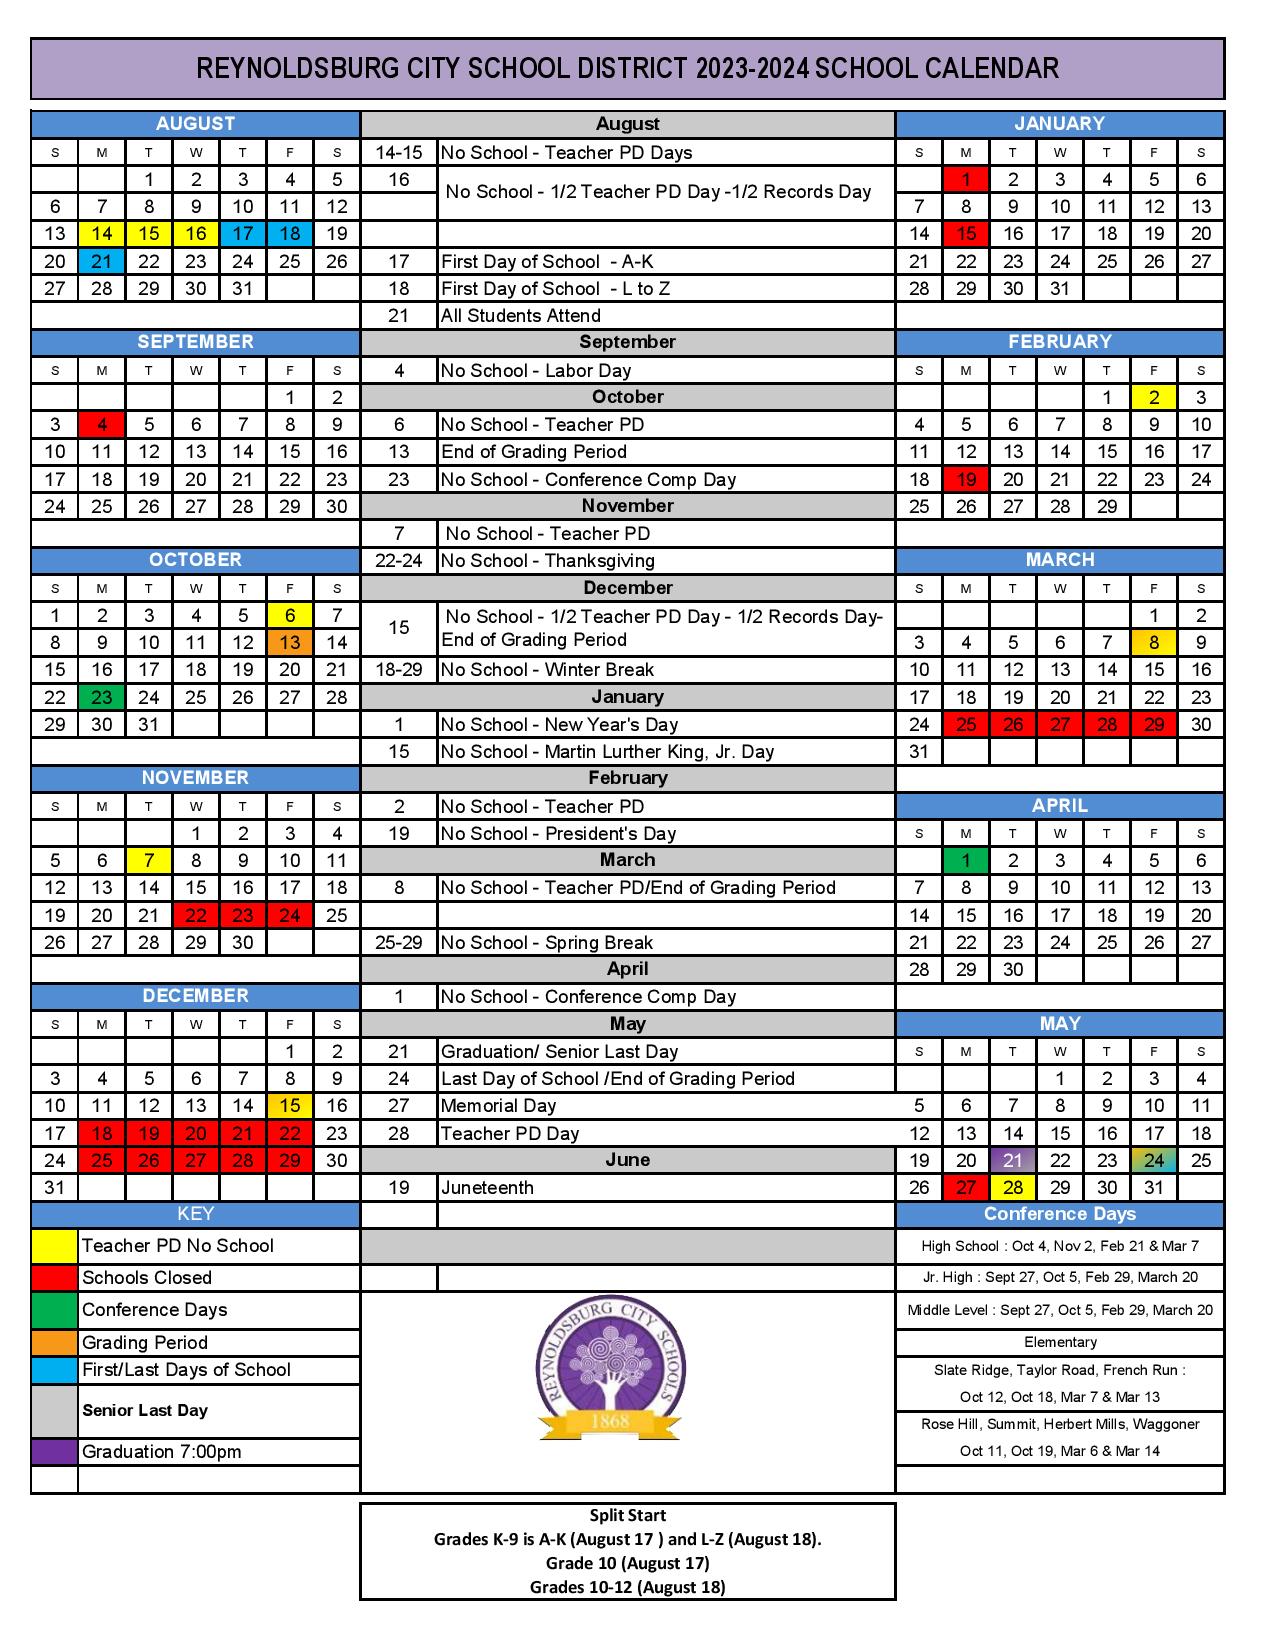 Reynoldsburg City Schools Calendar 2023-2024 in PDF